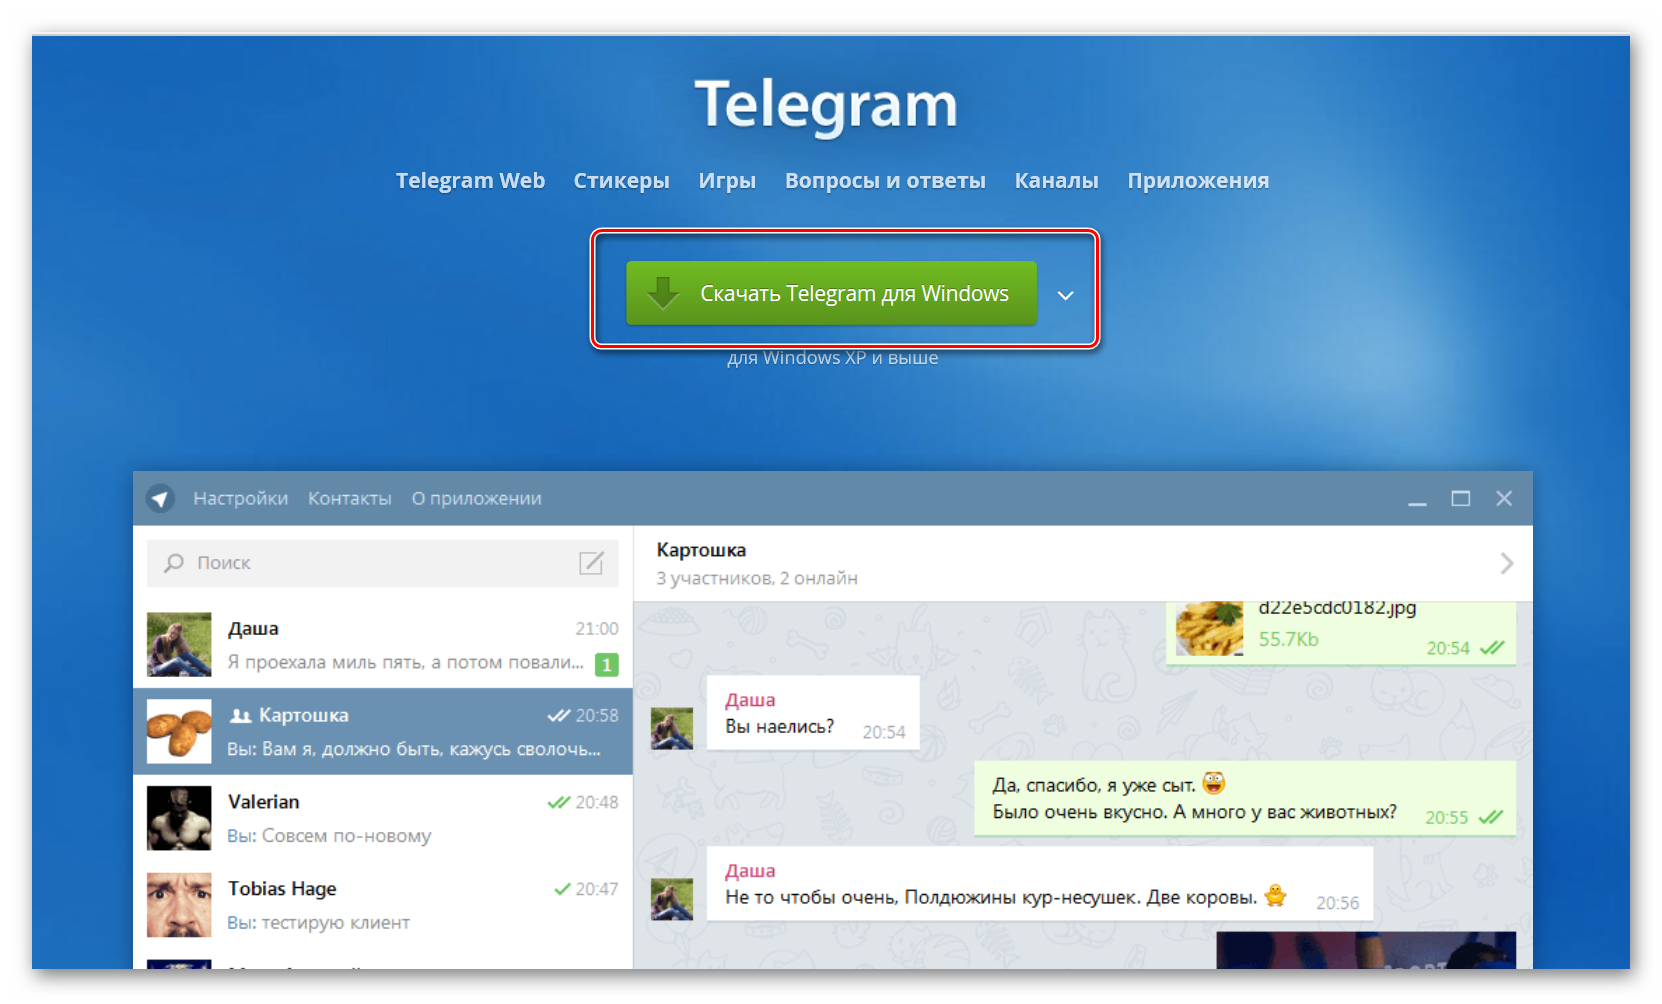 Telegram profil. Профиль в телеграмме. Телеграмм web. Веб приложение в телеграм.